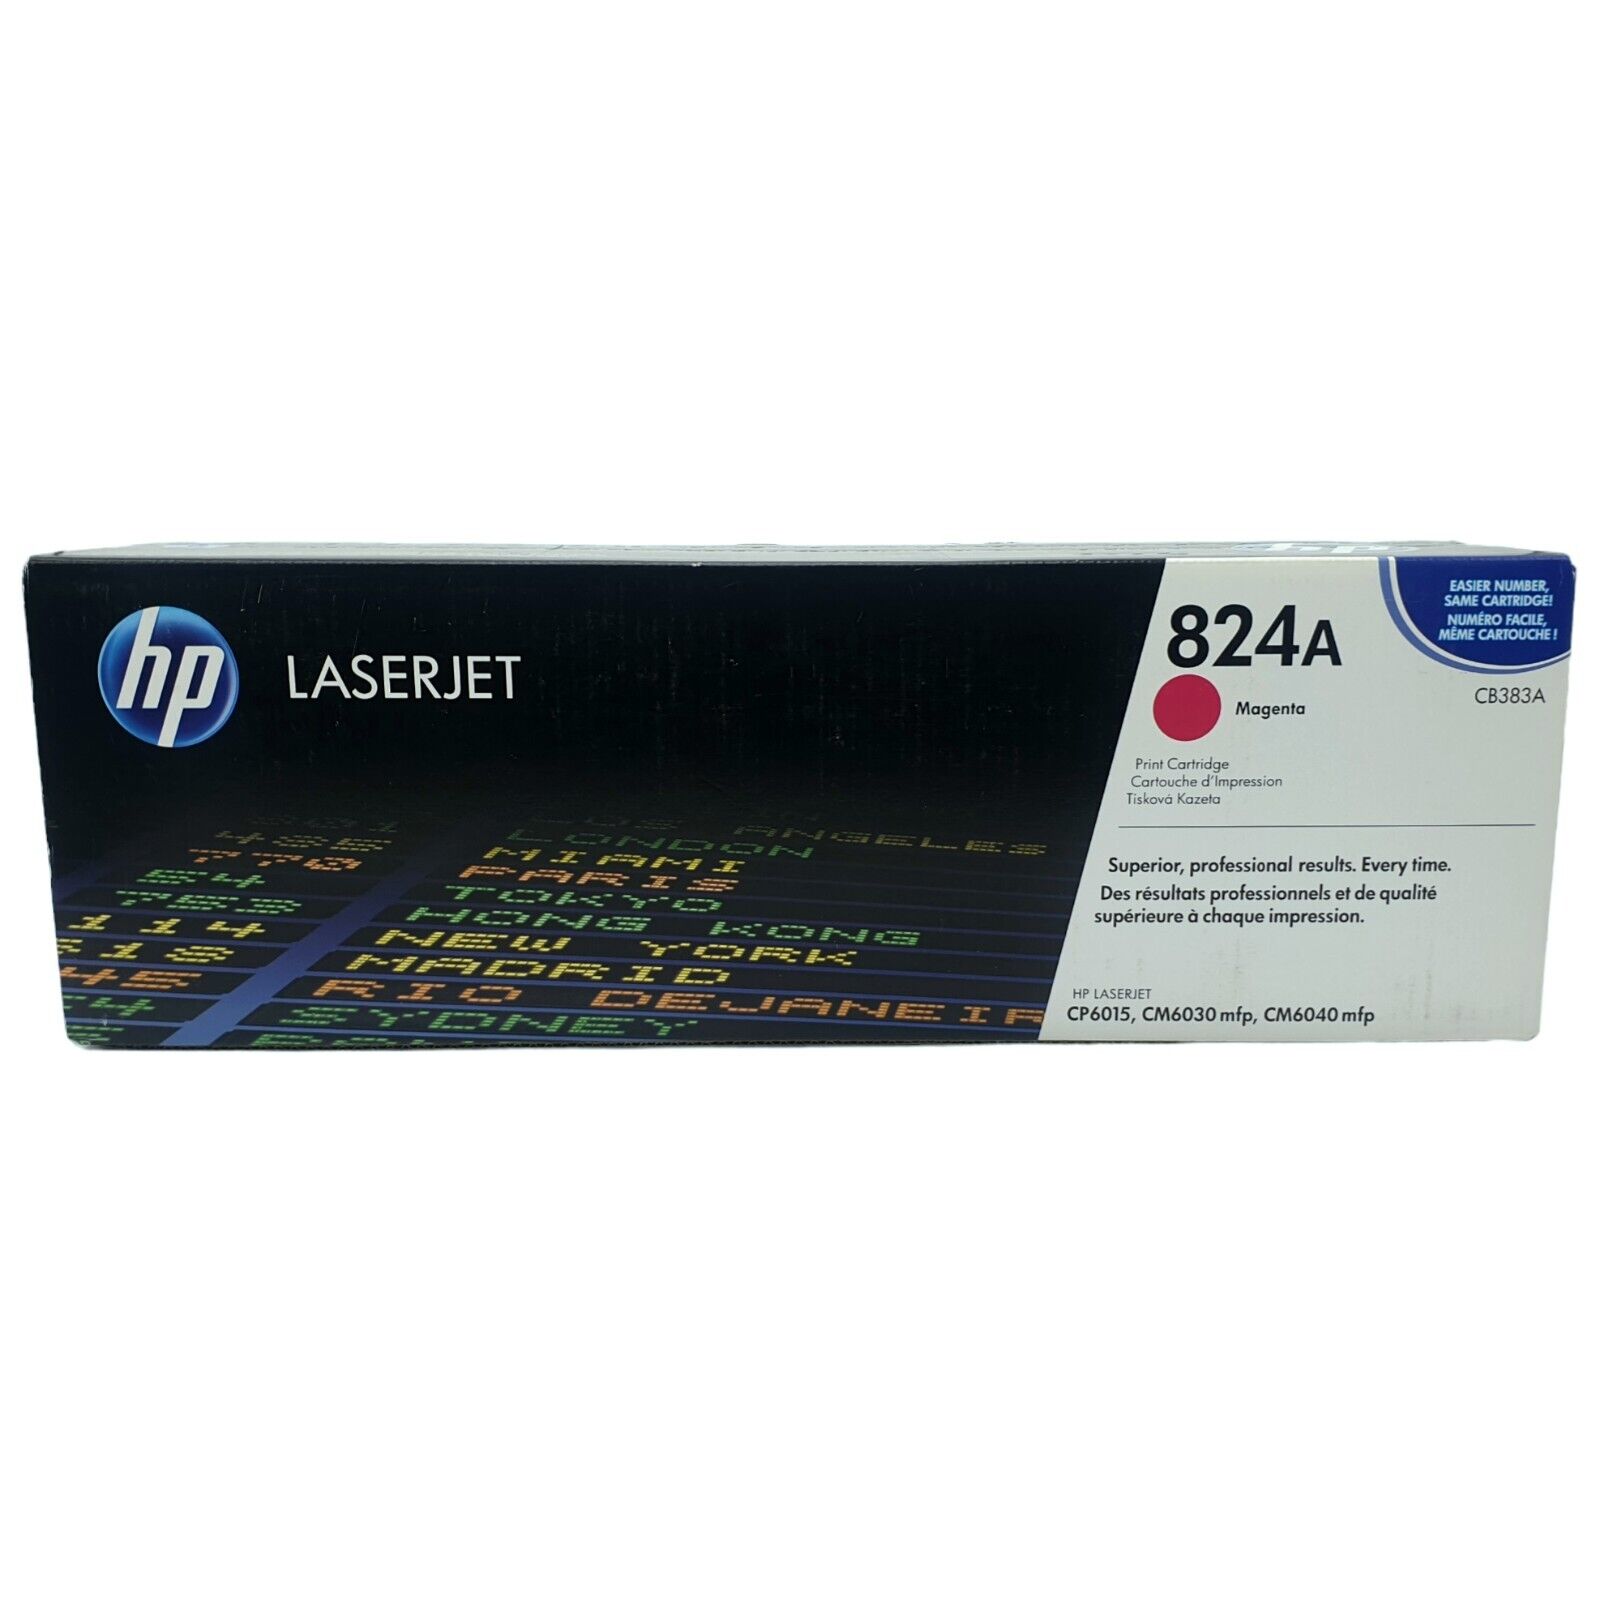 HP 824A Magenta Toner Cartridge CB383A Original Genuine Color LaserJet Printer